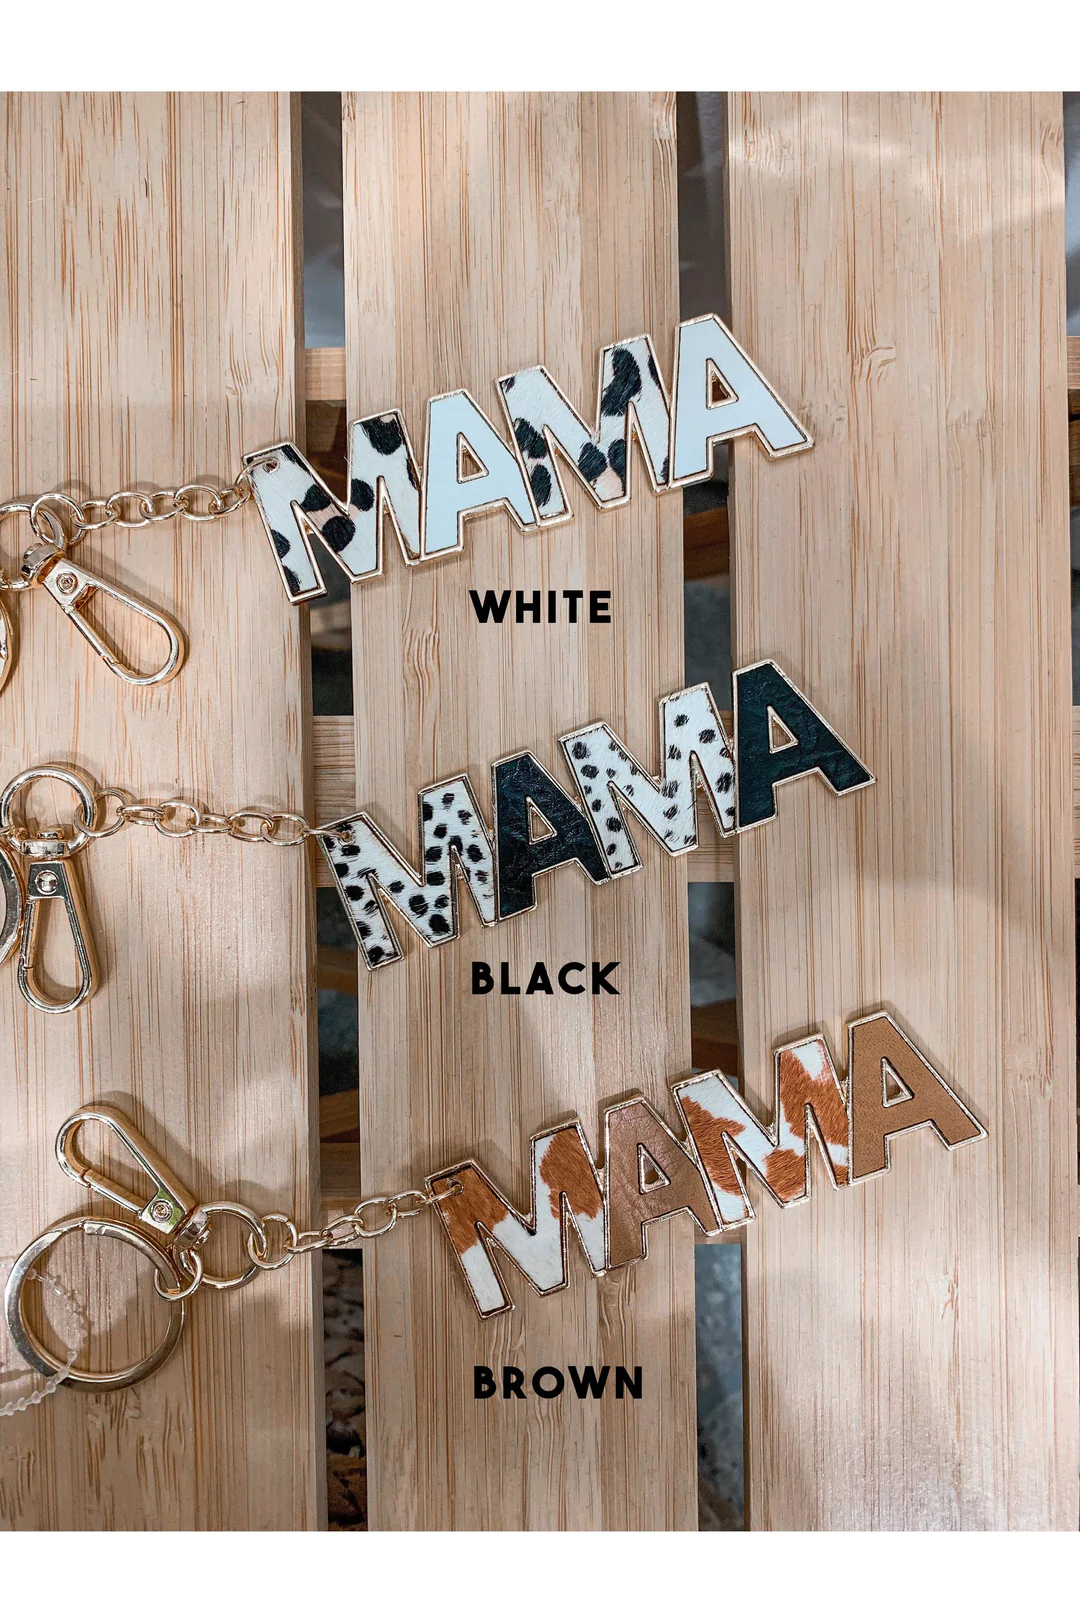 Three animal print keychains with the word "Mama" on them.